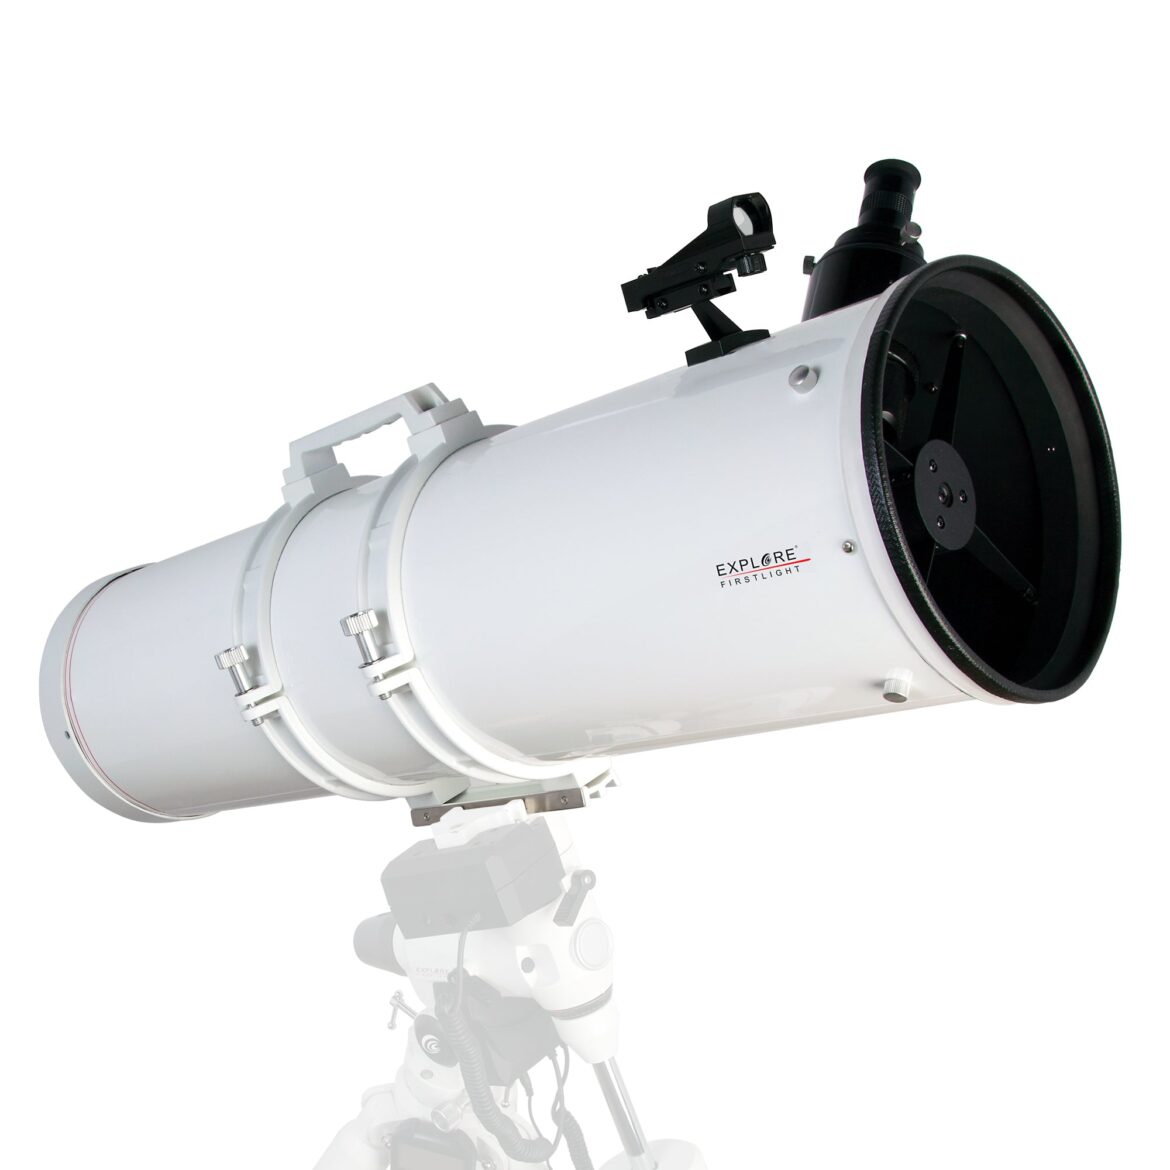 Explore FirstLight 203mm Newtonian Telescope – FL-N2031000